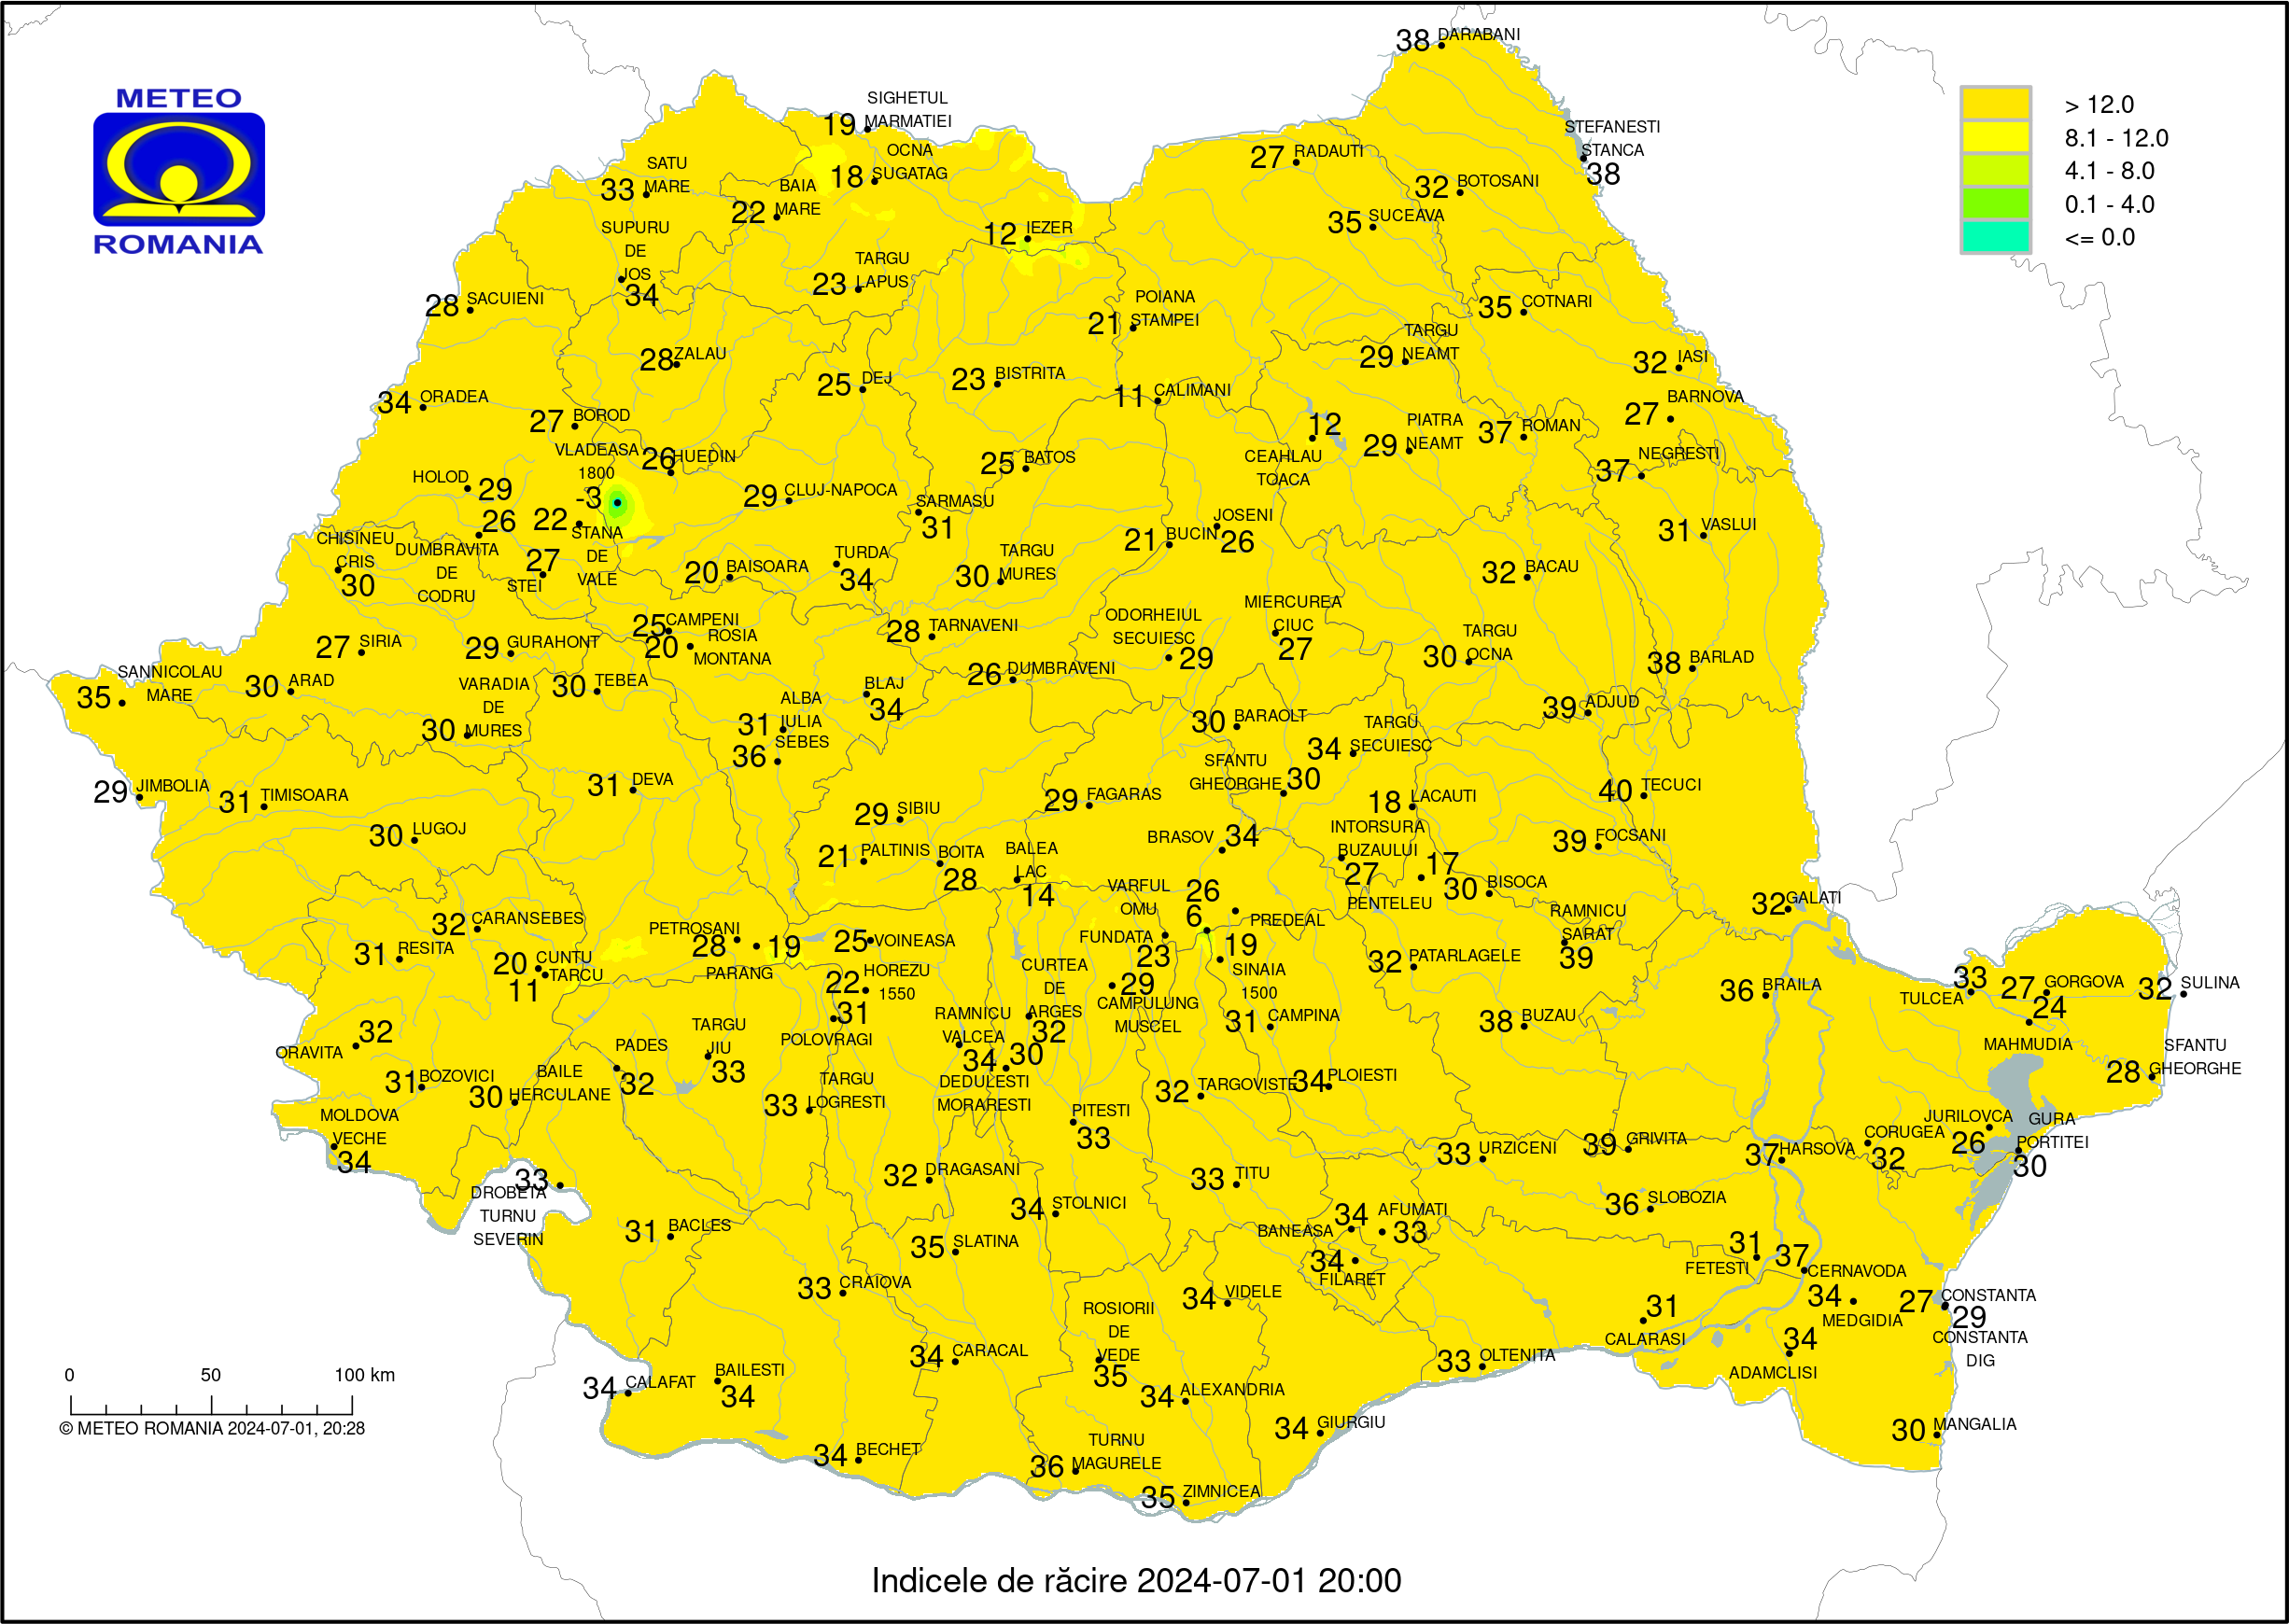 de ober Het is de bedoeling dat Los Meteo Romania | Monitorizare climatică